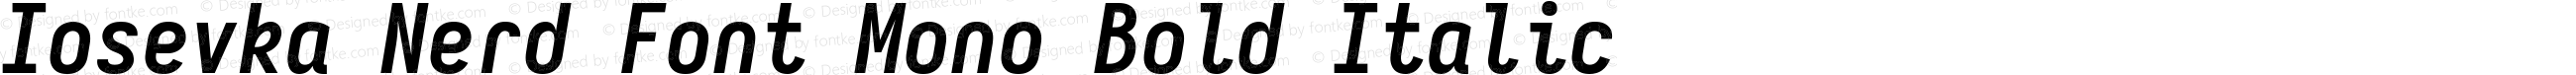 Iosevka Mayukai Serif Bold Italic Nerd Font Complete Mono